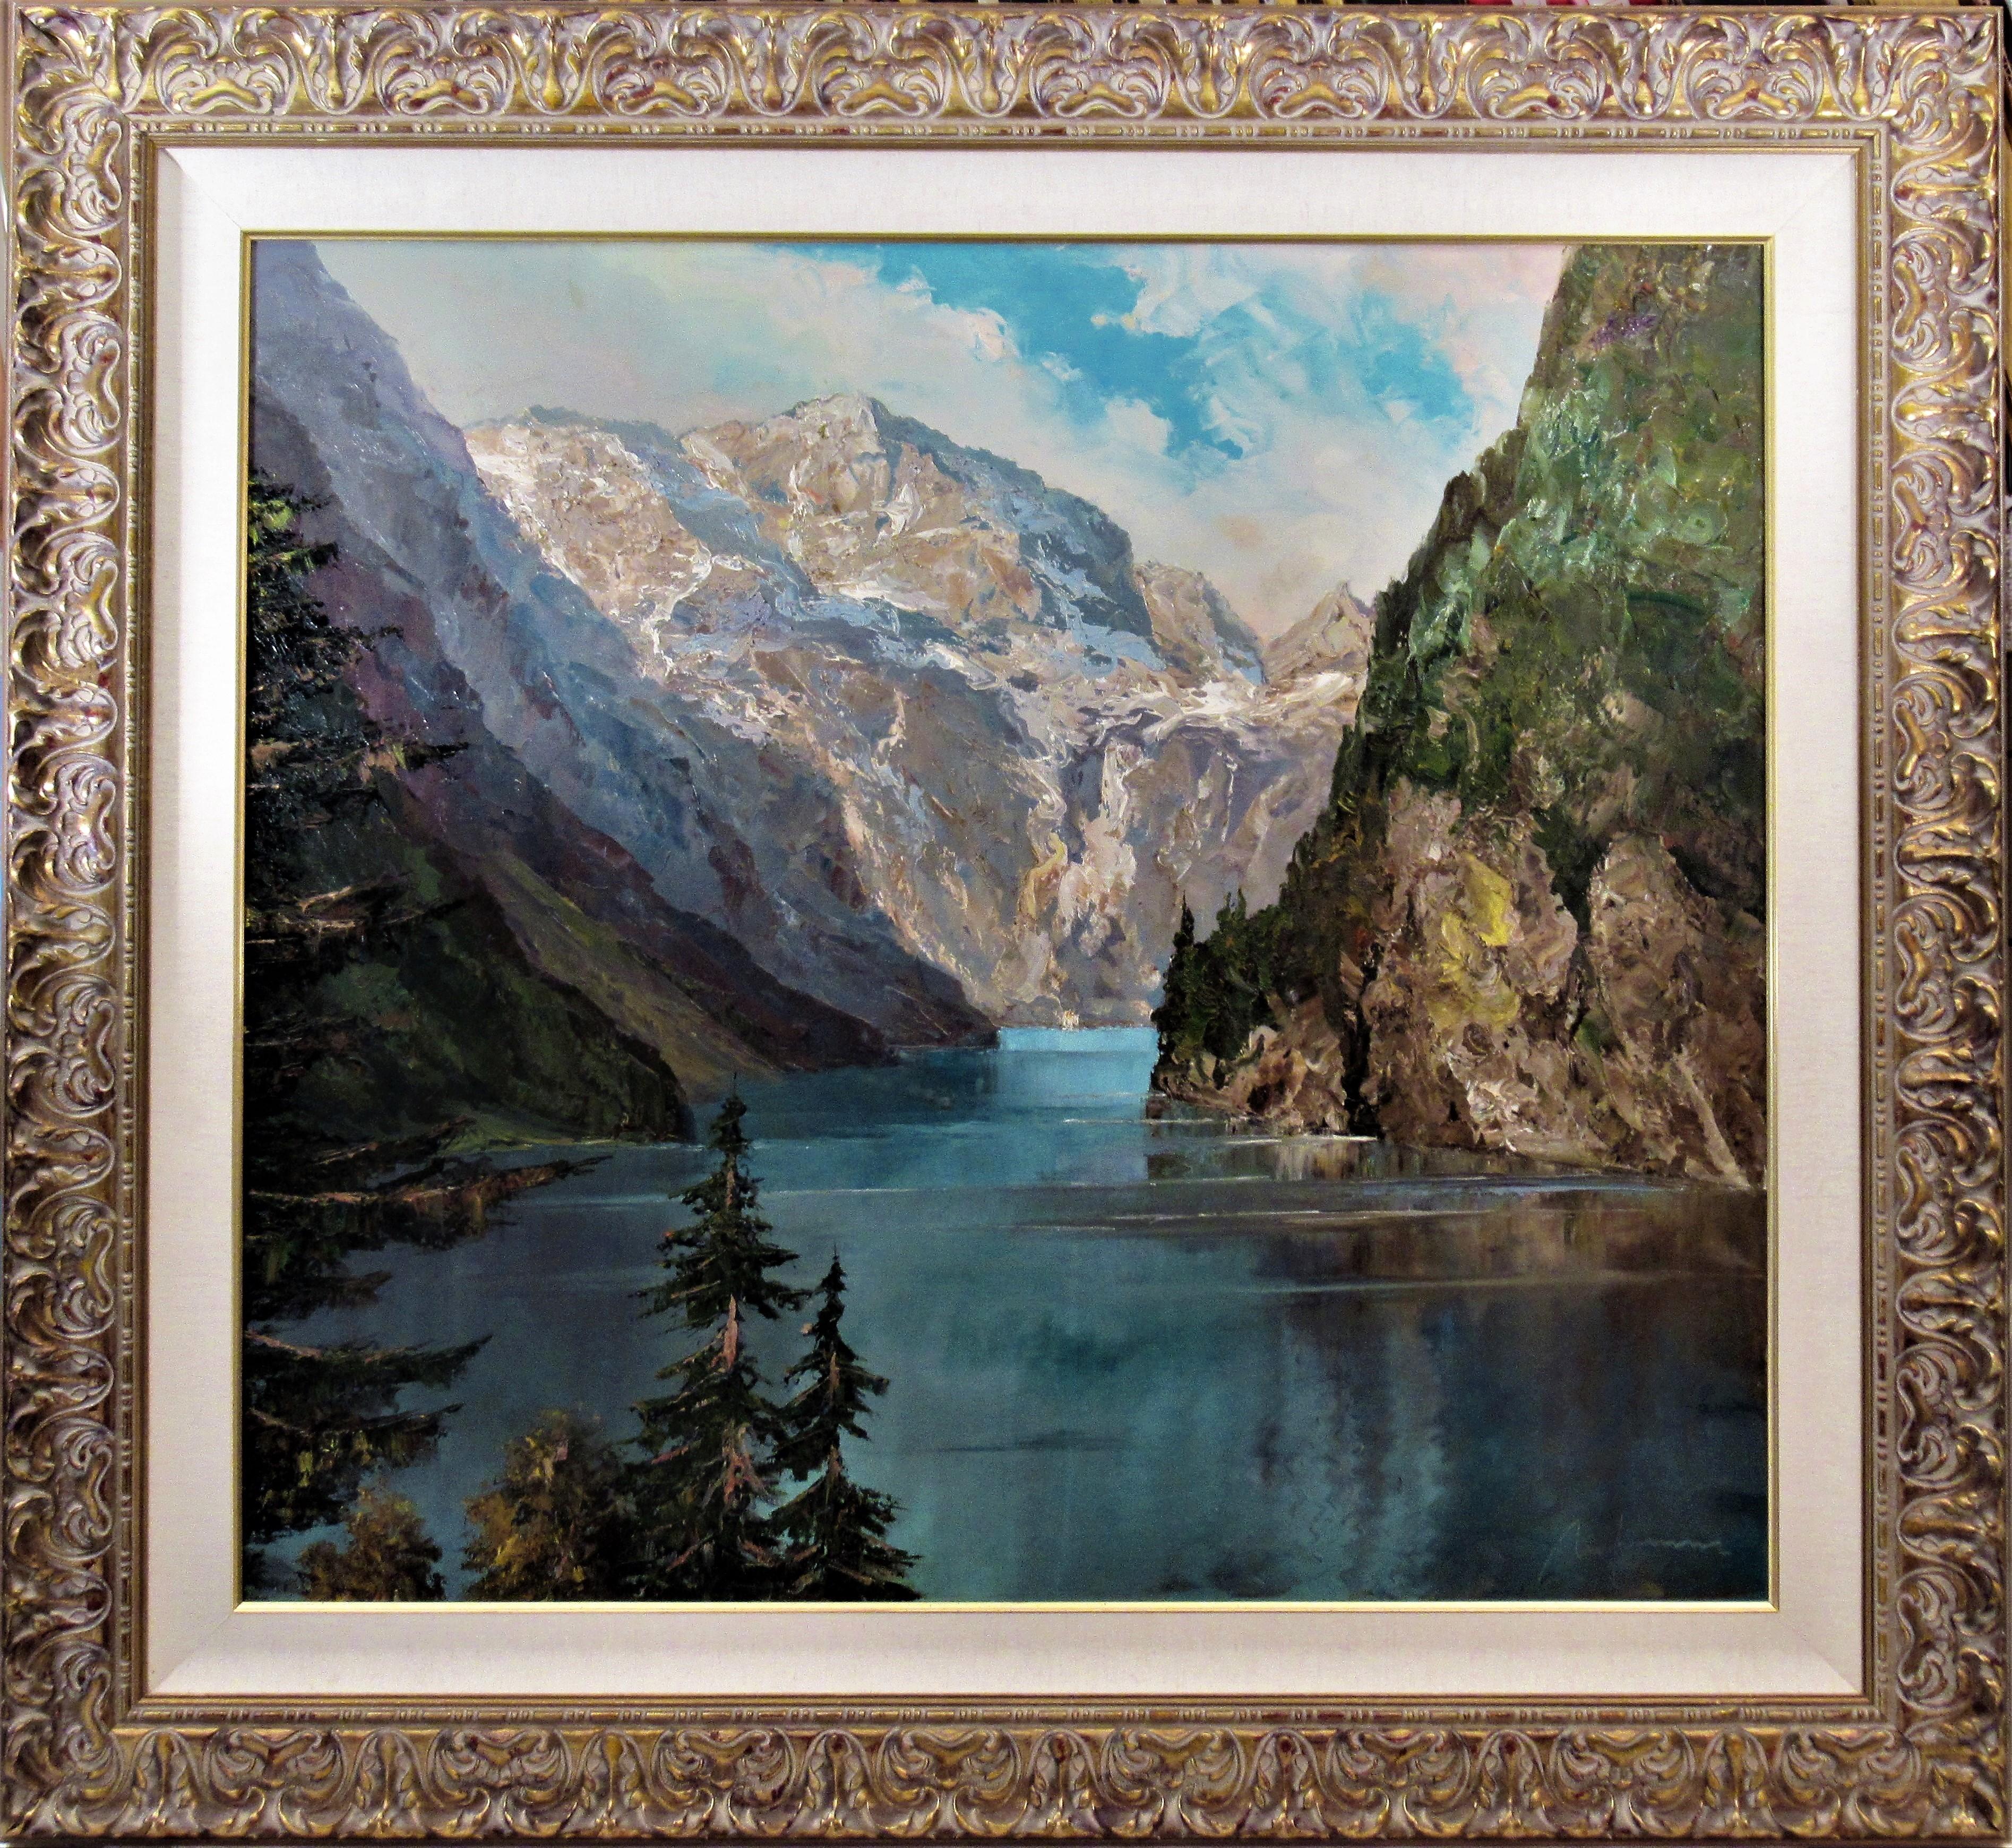 Herbert August Uerpman Landscape Painting - The Alps, Large oil painting on canvas.